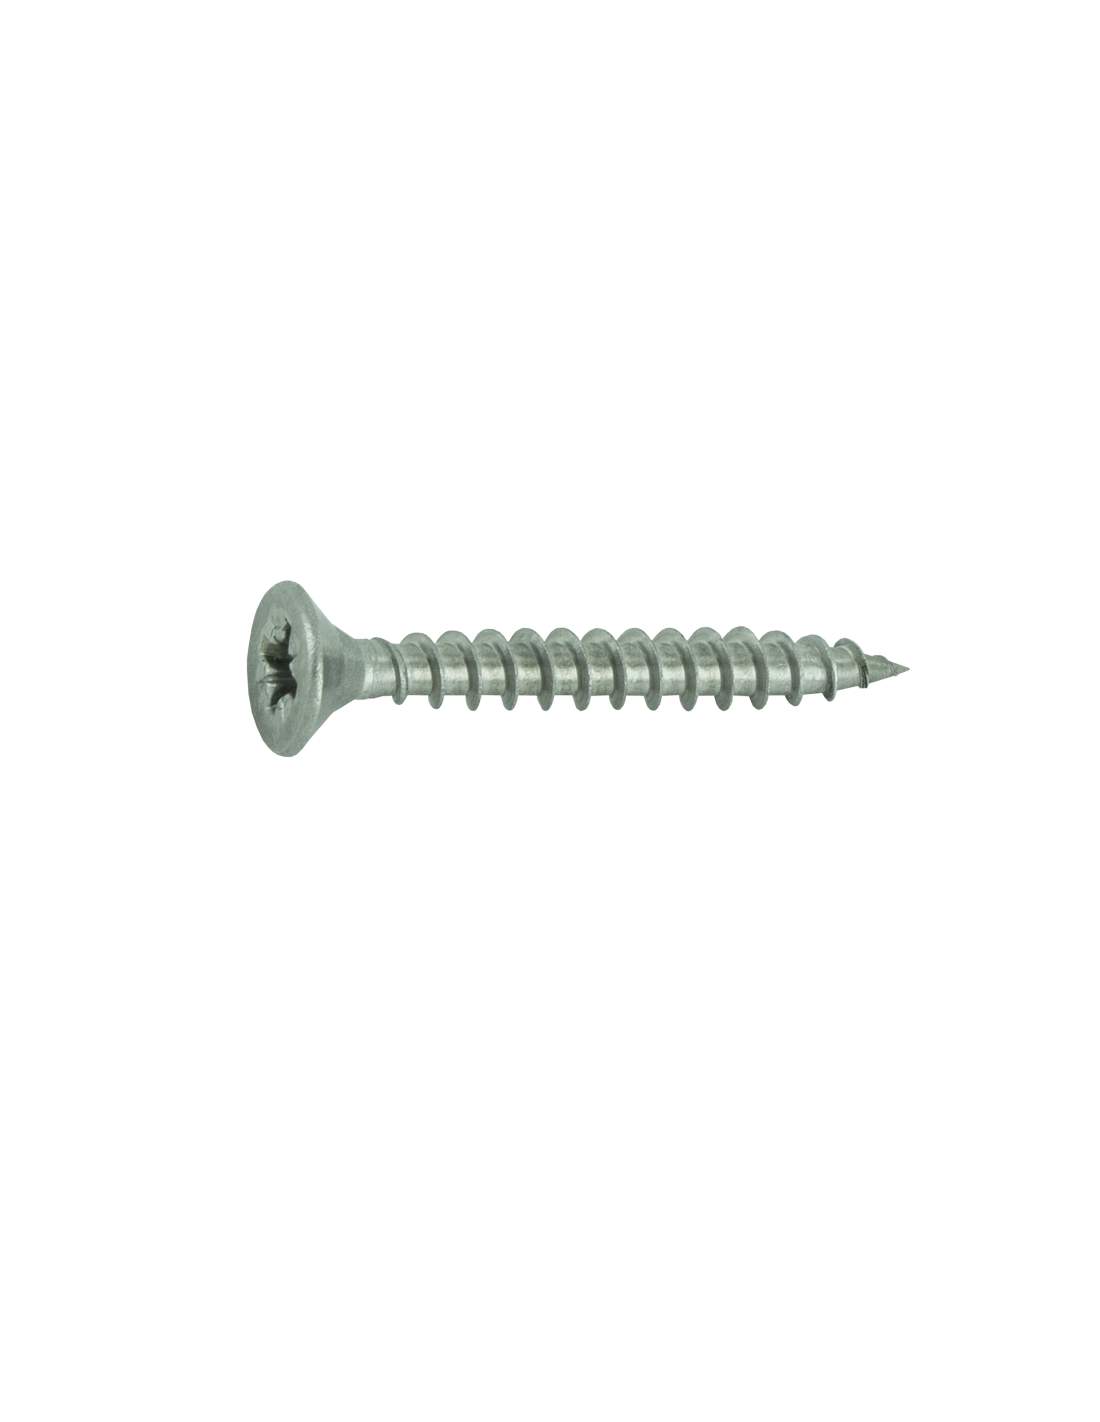 Pozidriv stainless steel countersunk screws A2 4x25, 26 pcs.